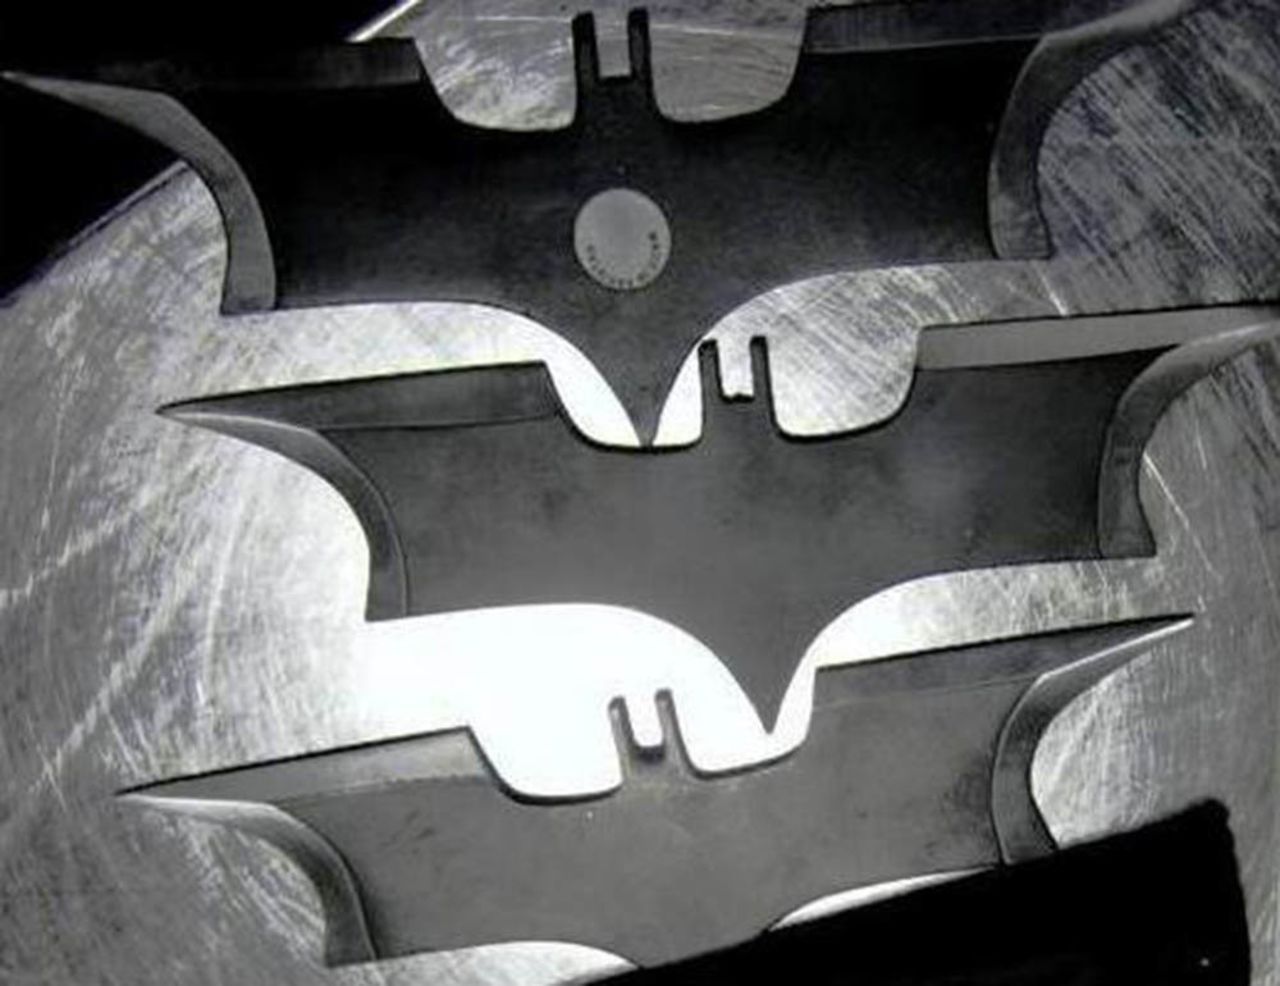 Throwing stars shaped like the Batman symbol were found at San Diego International Airport.